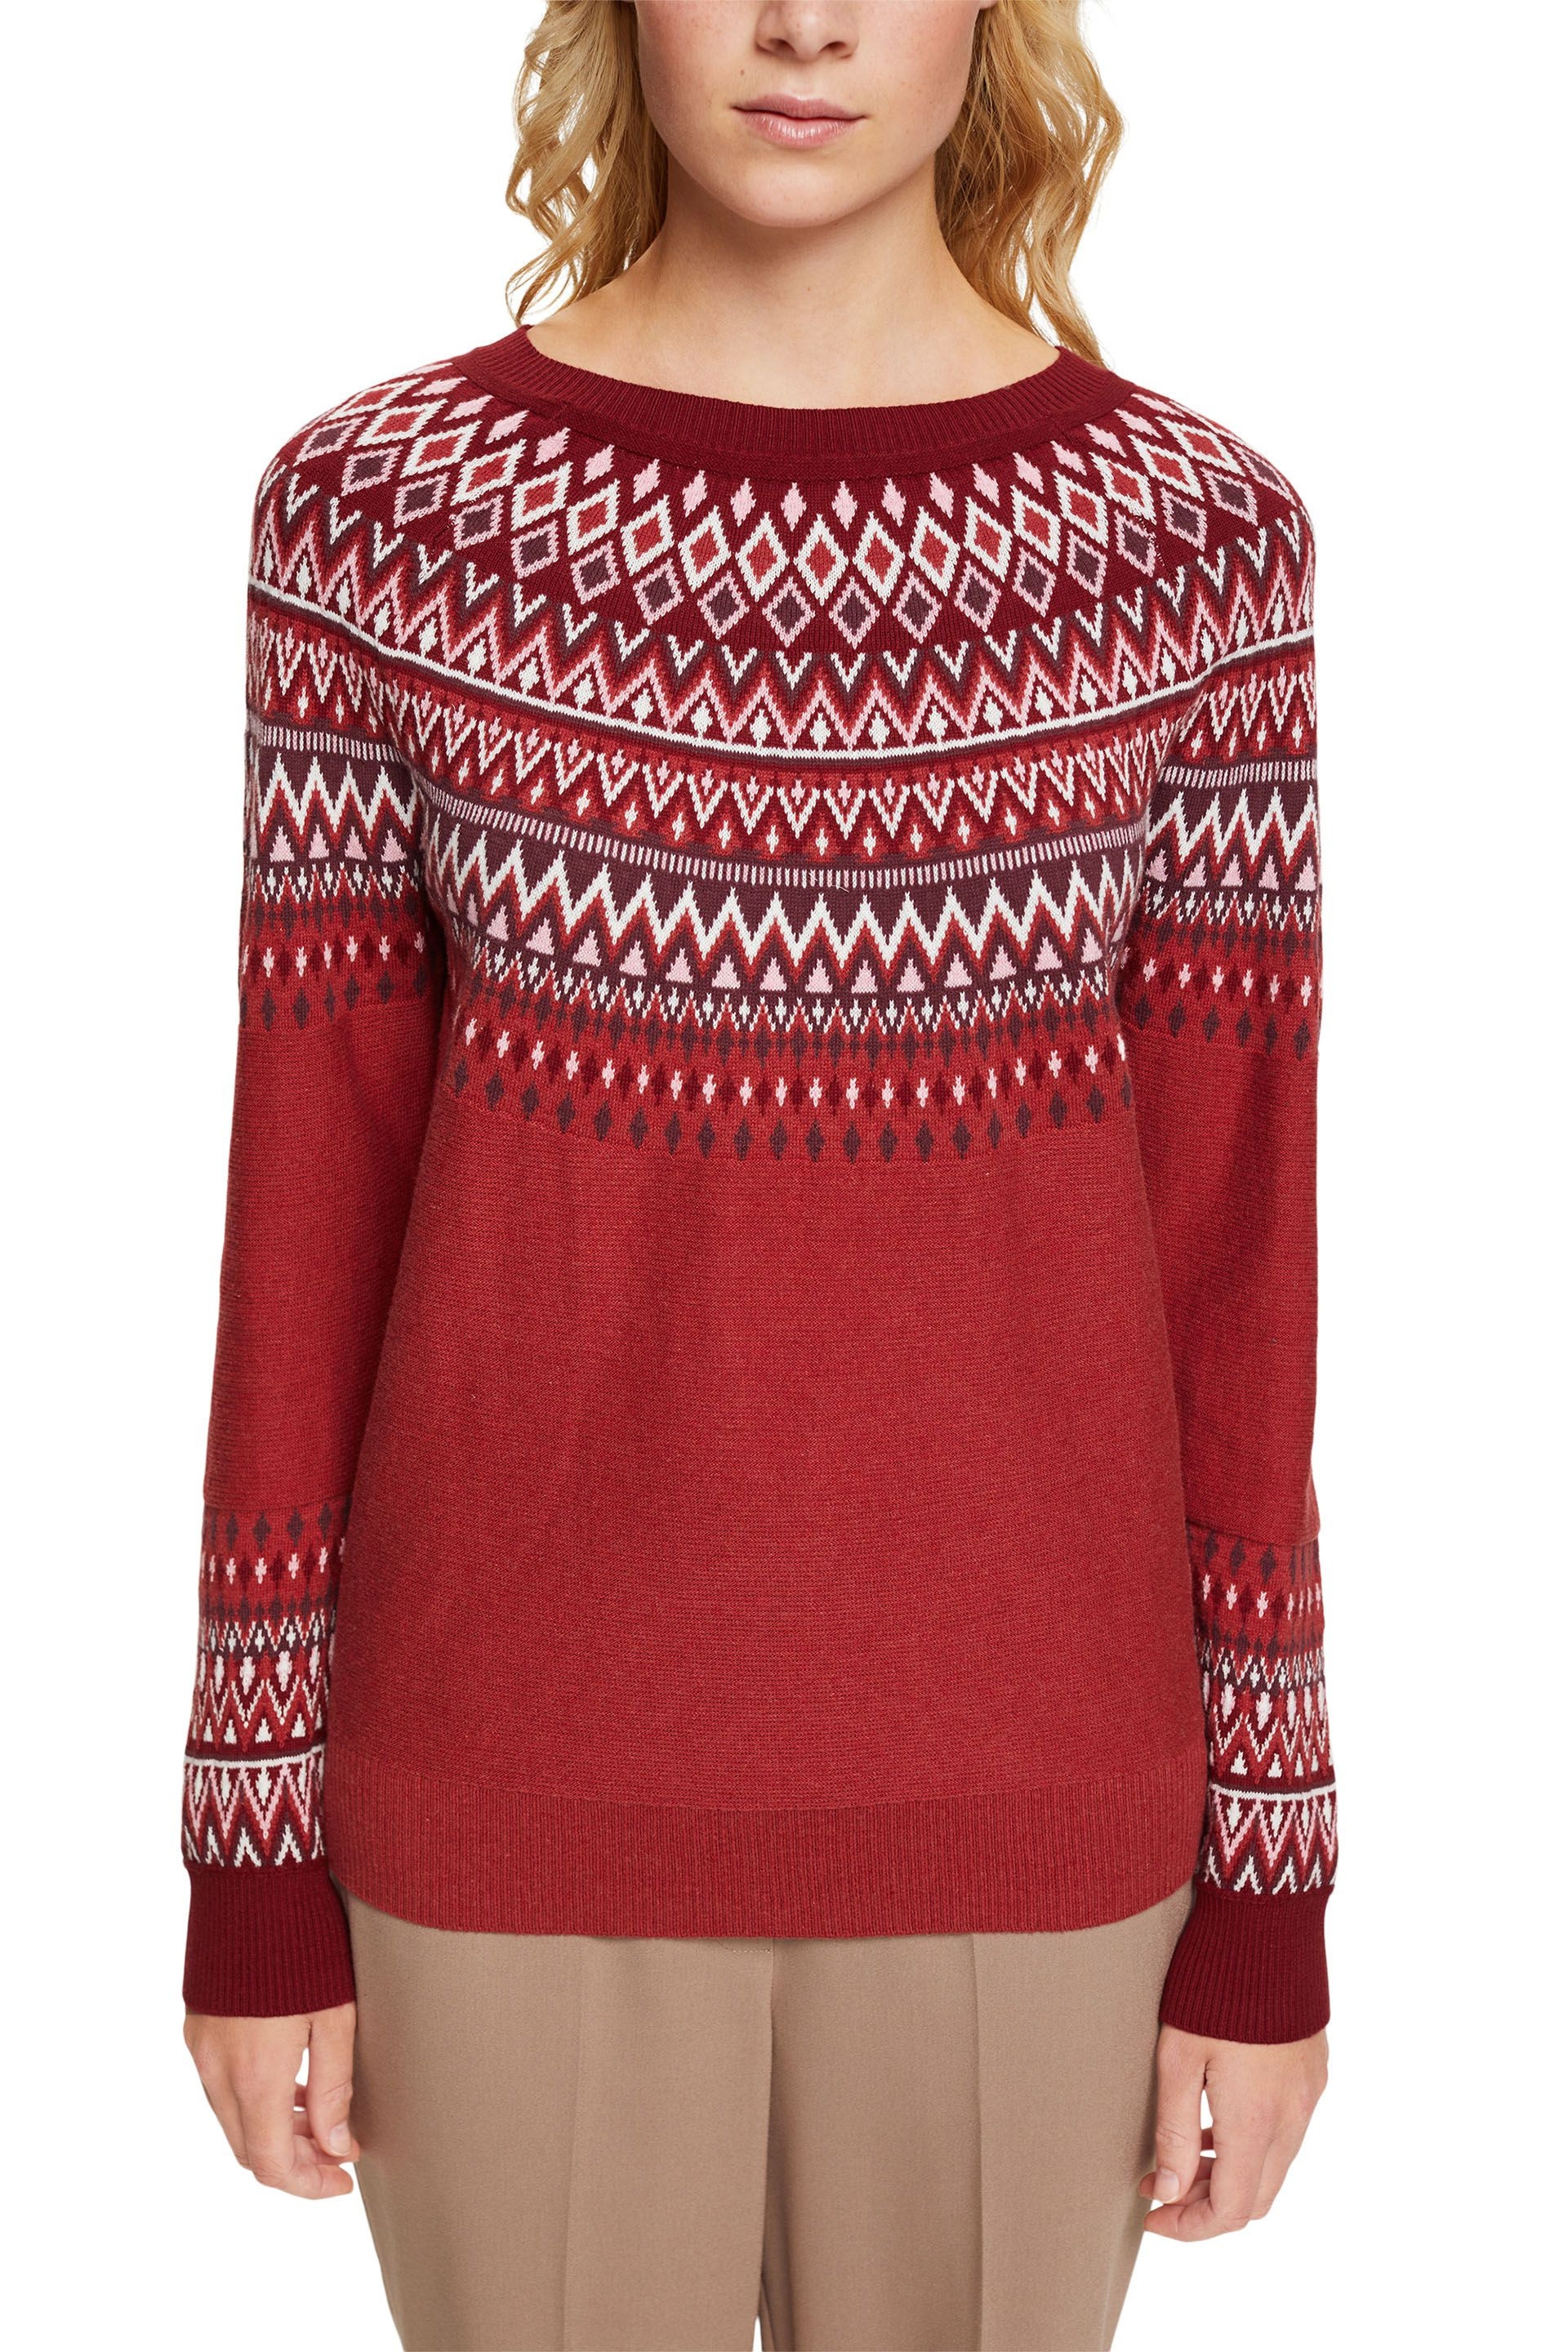 Jacquard crewneck sweater, Brick Red, large image number 1